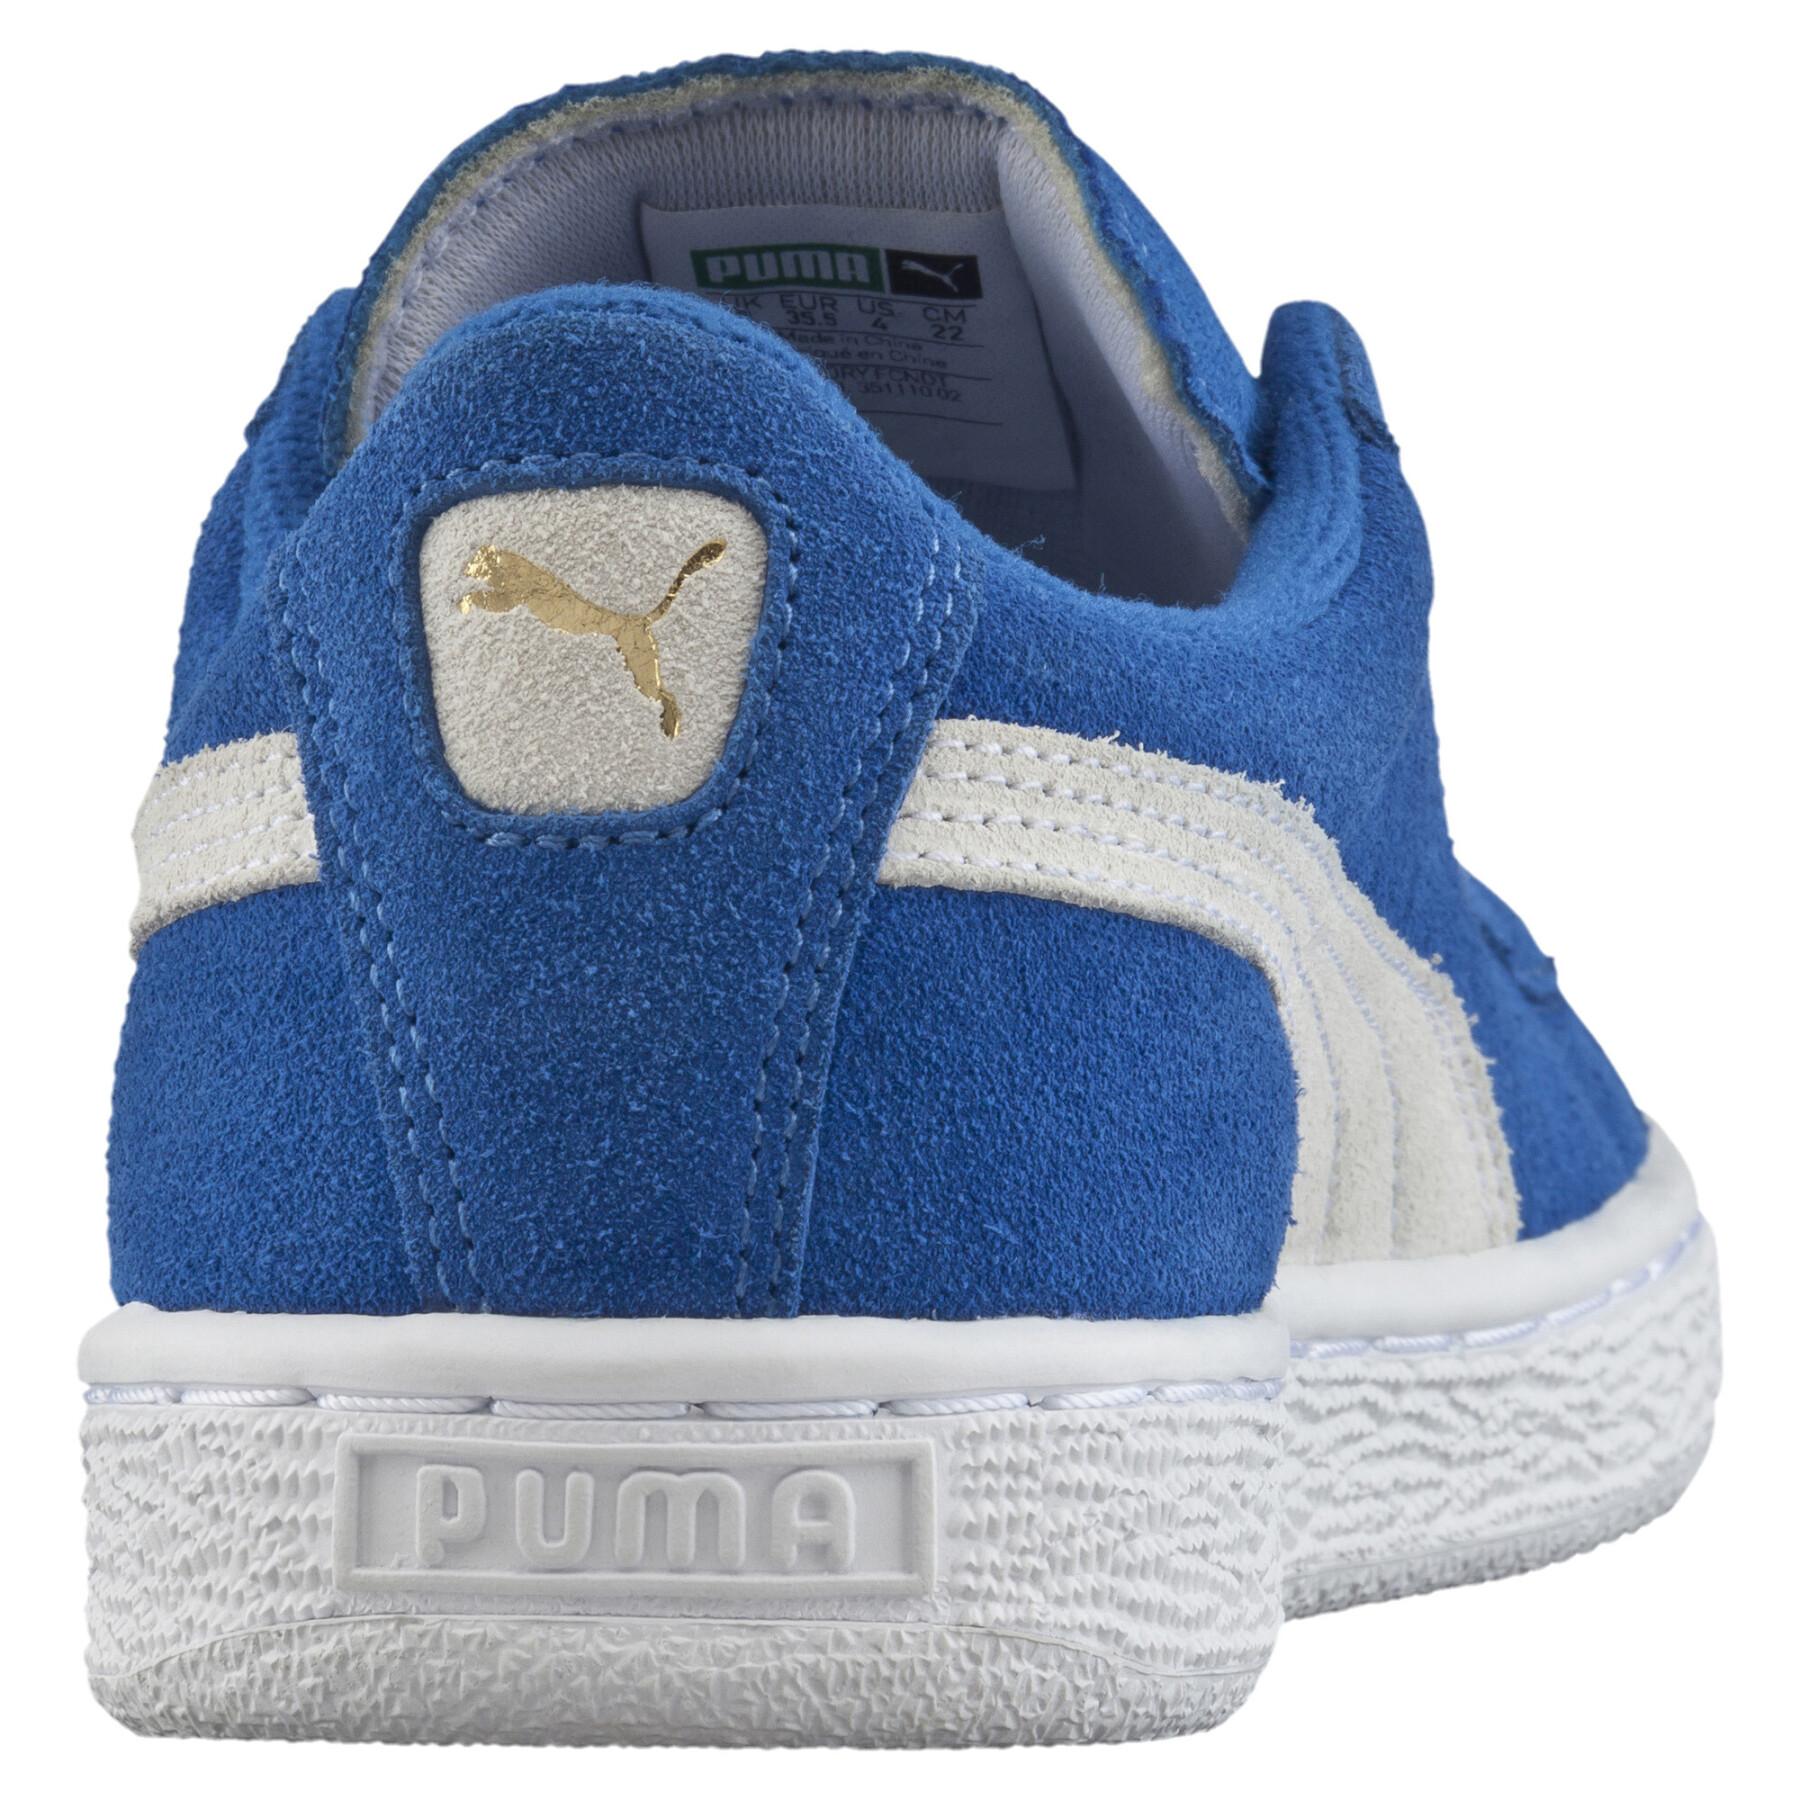 Children's sneakers Puma Basket Suede